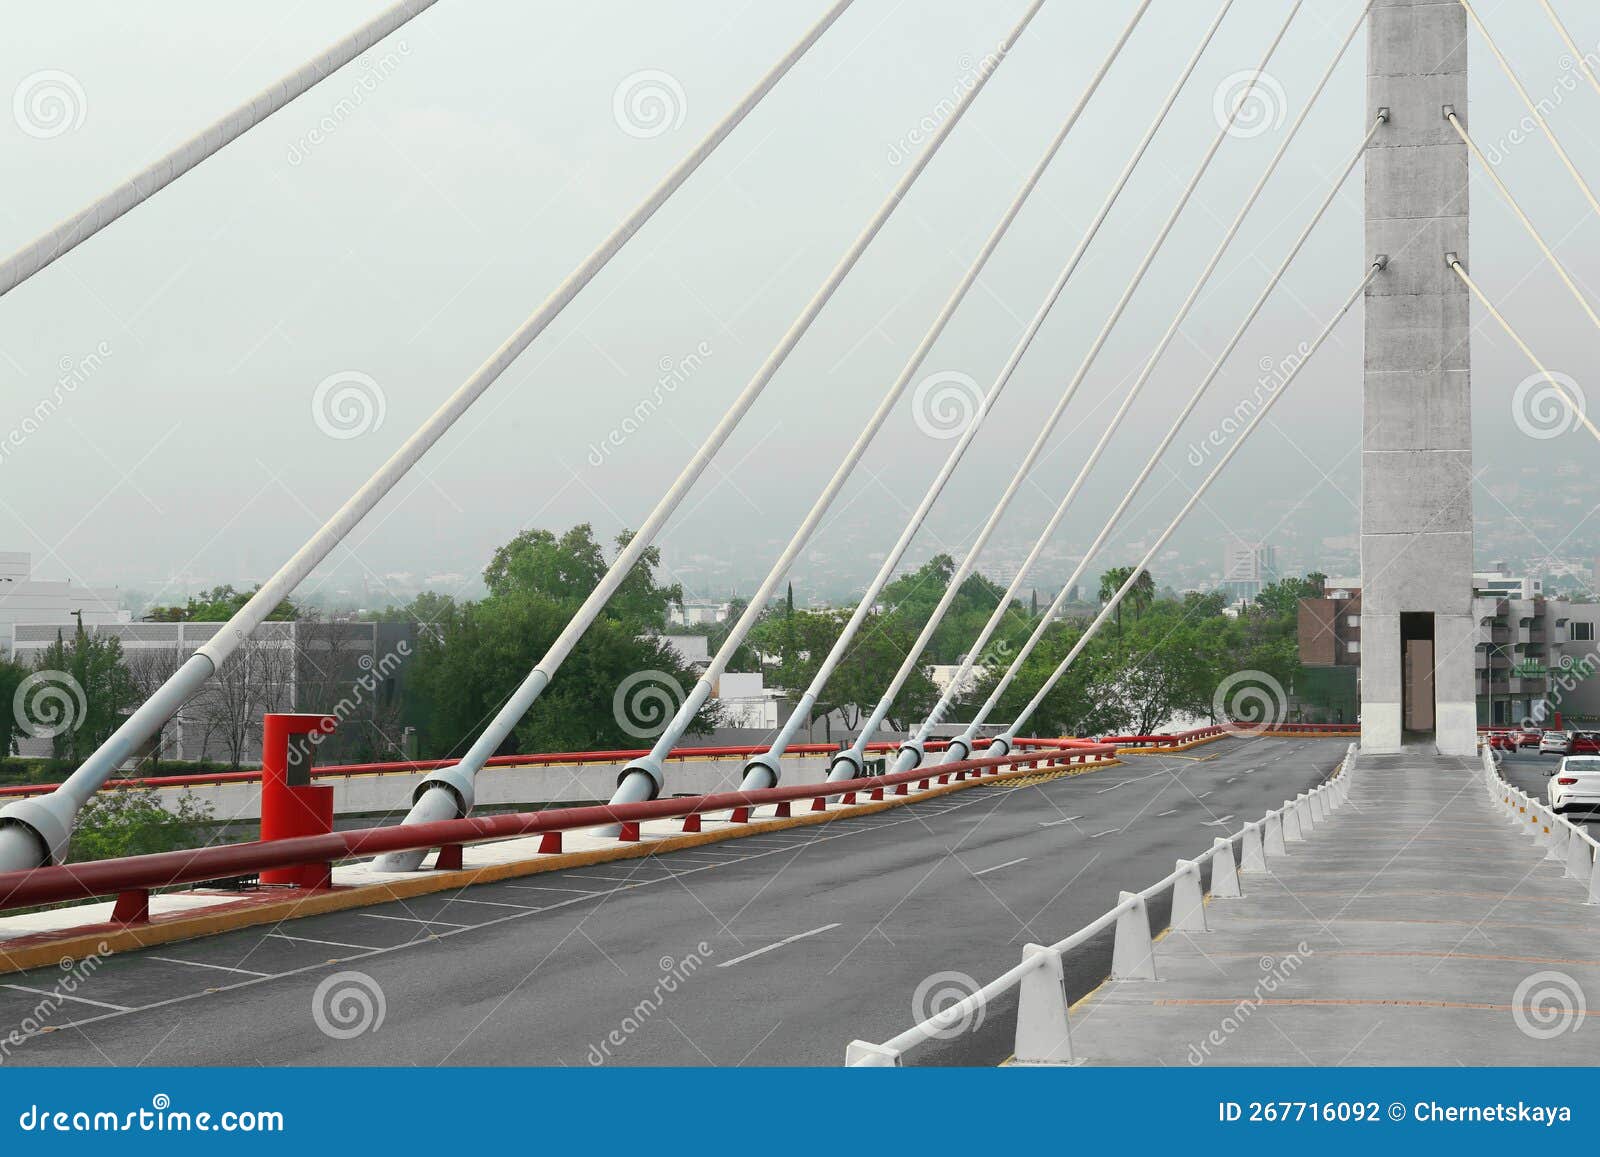 beautiful view of modern bridge with asphalt road near mountain